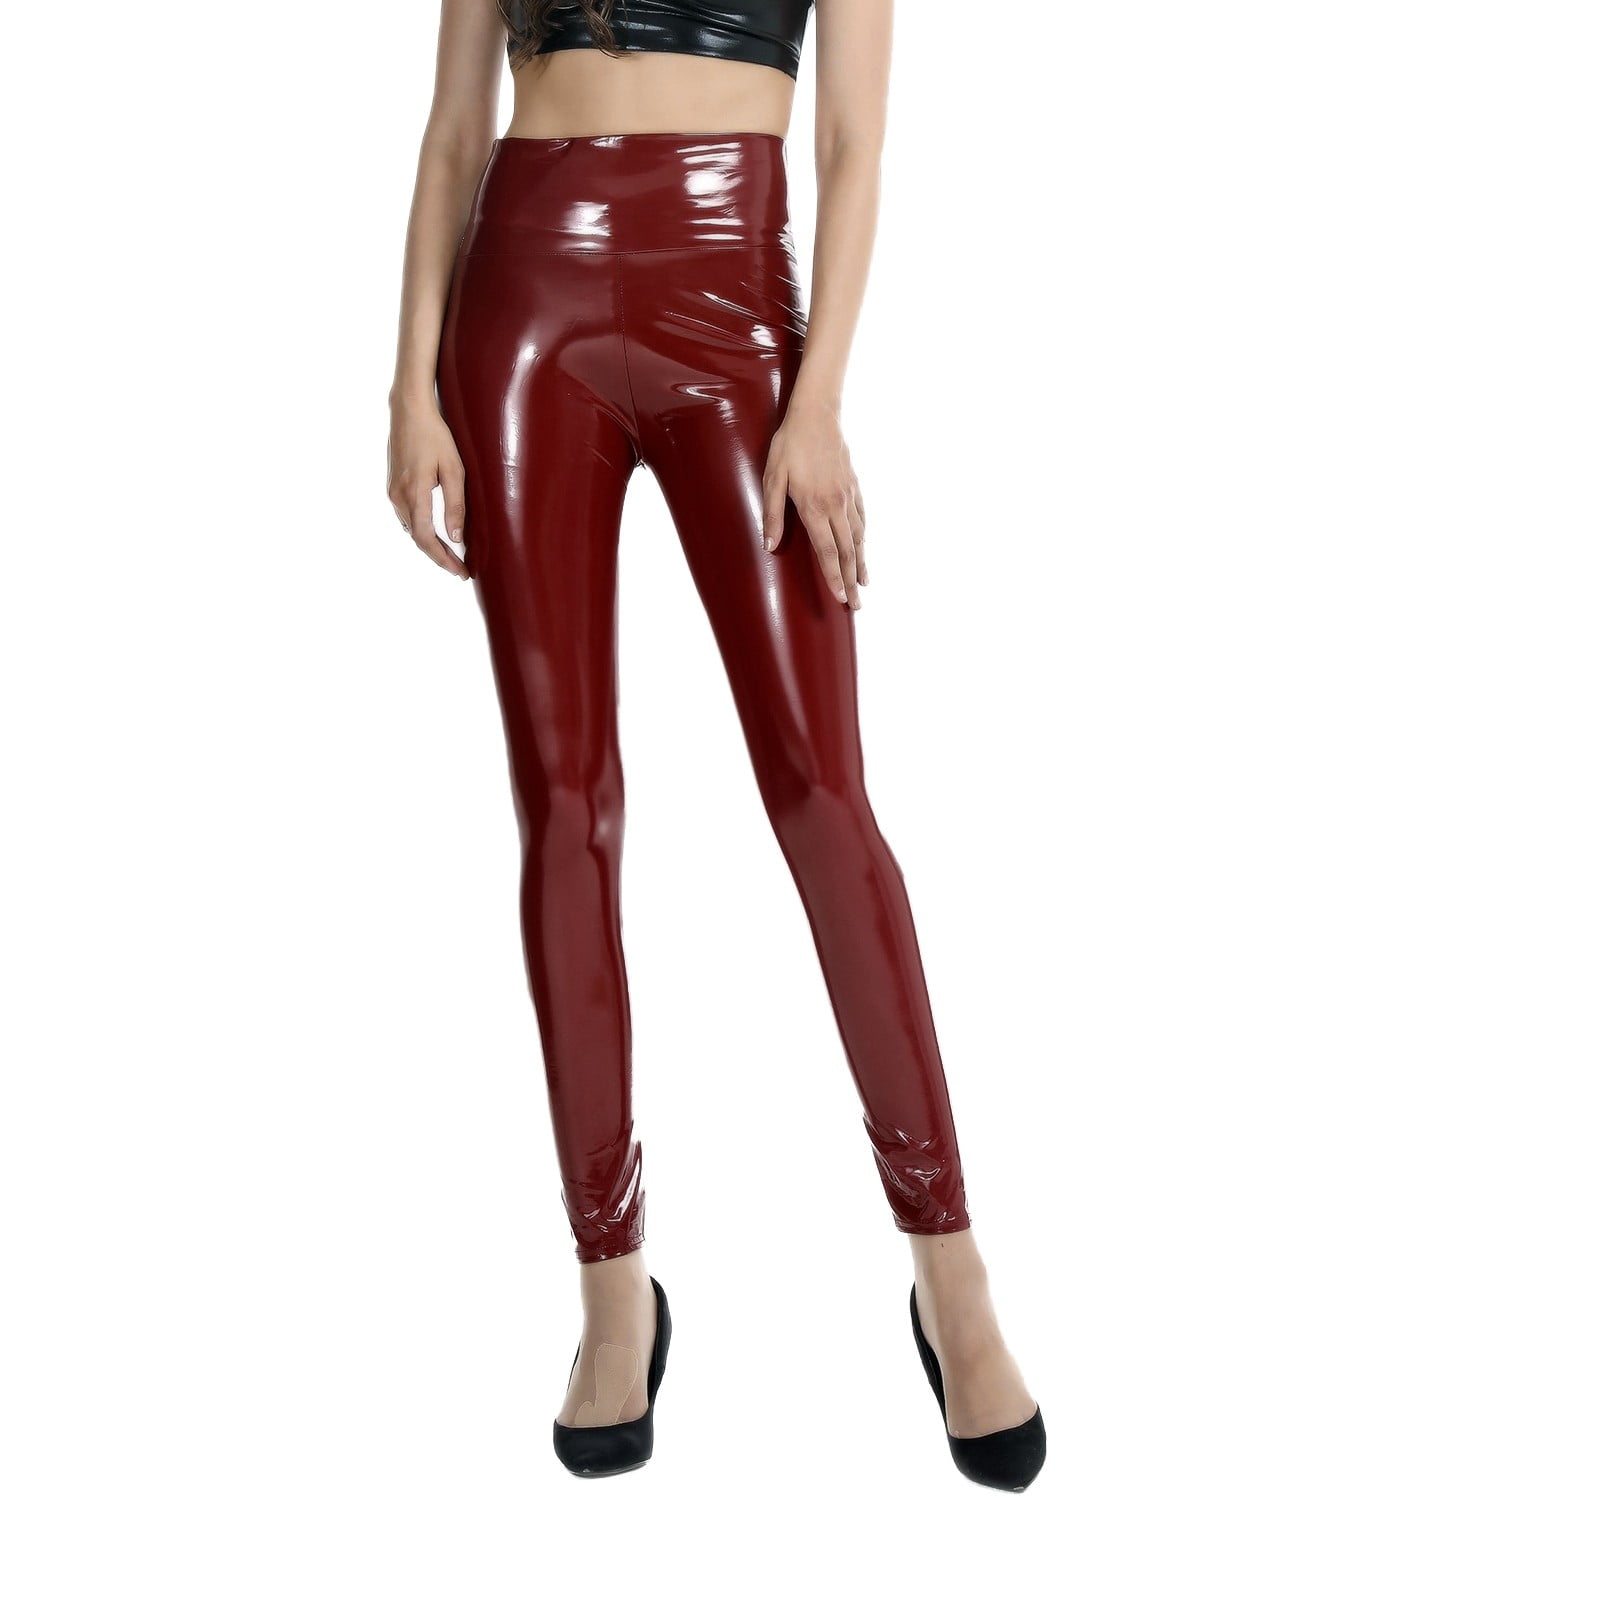 Latex Leggings - 10/10 curves? 🖤 High waist leather leggings at l